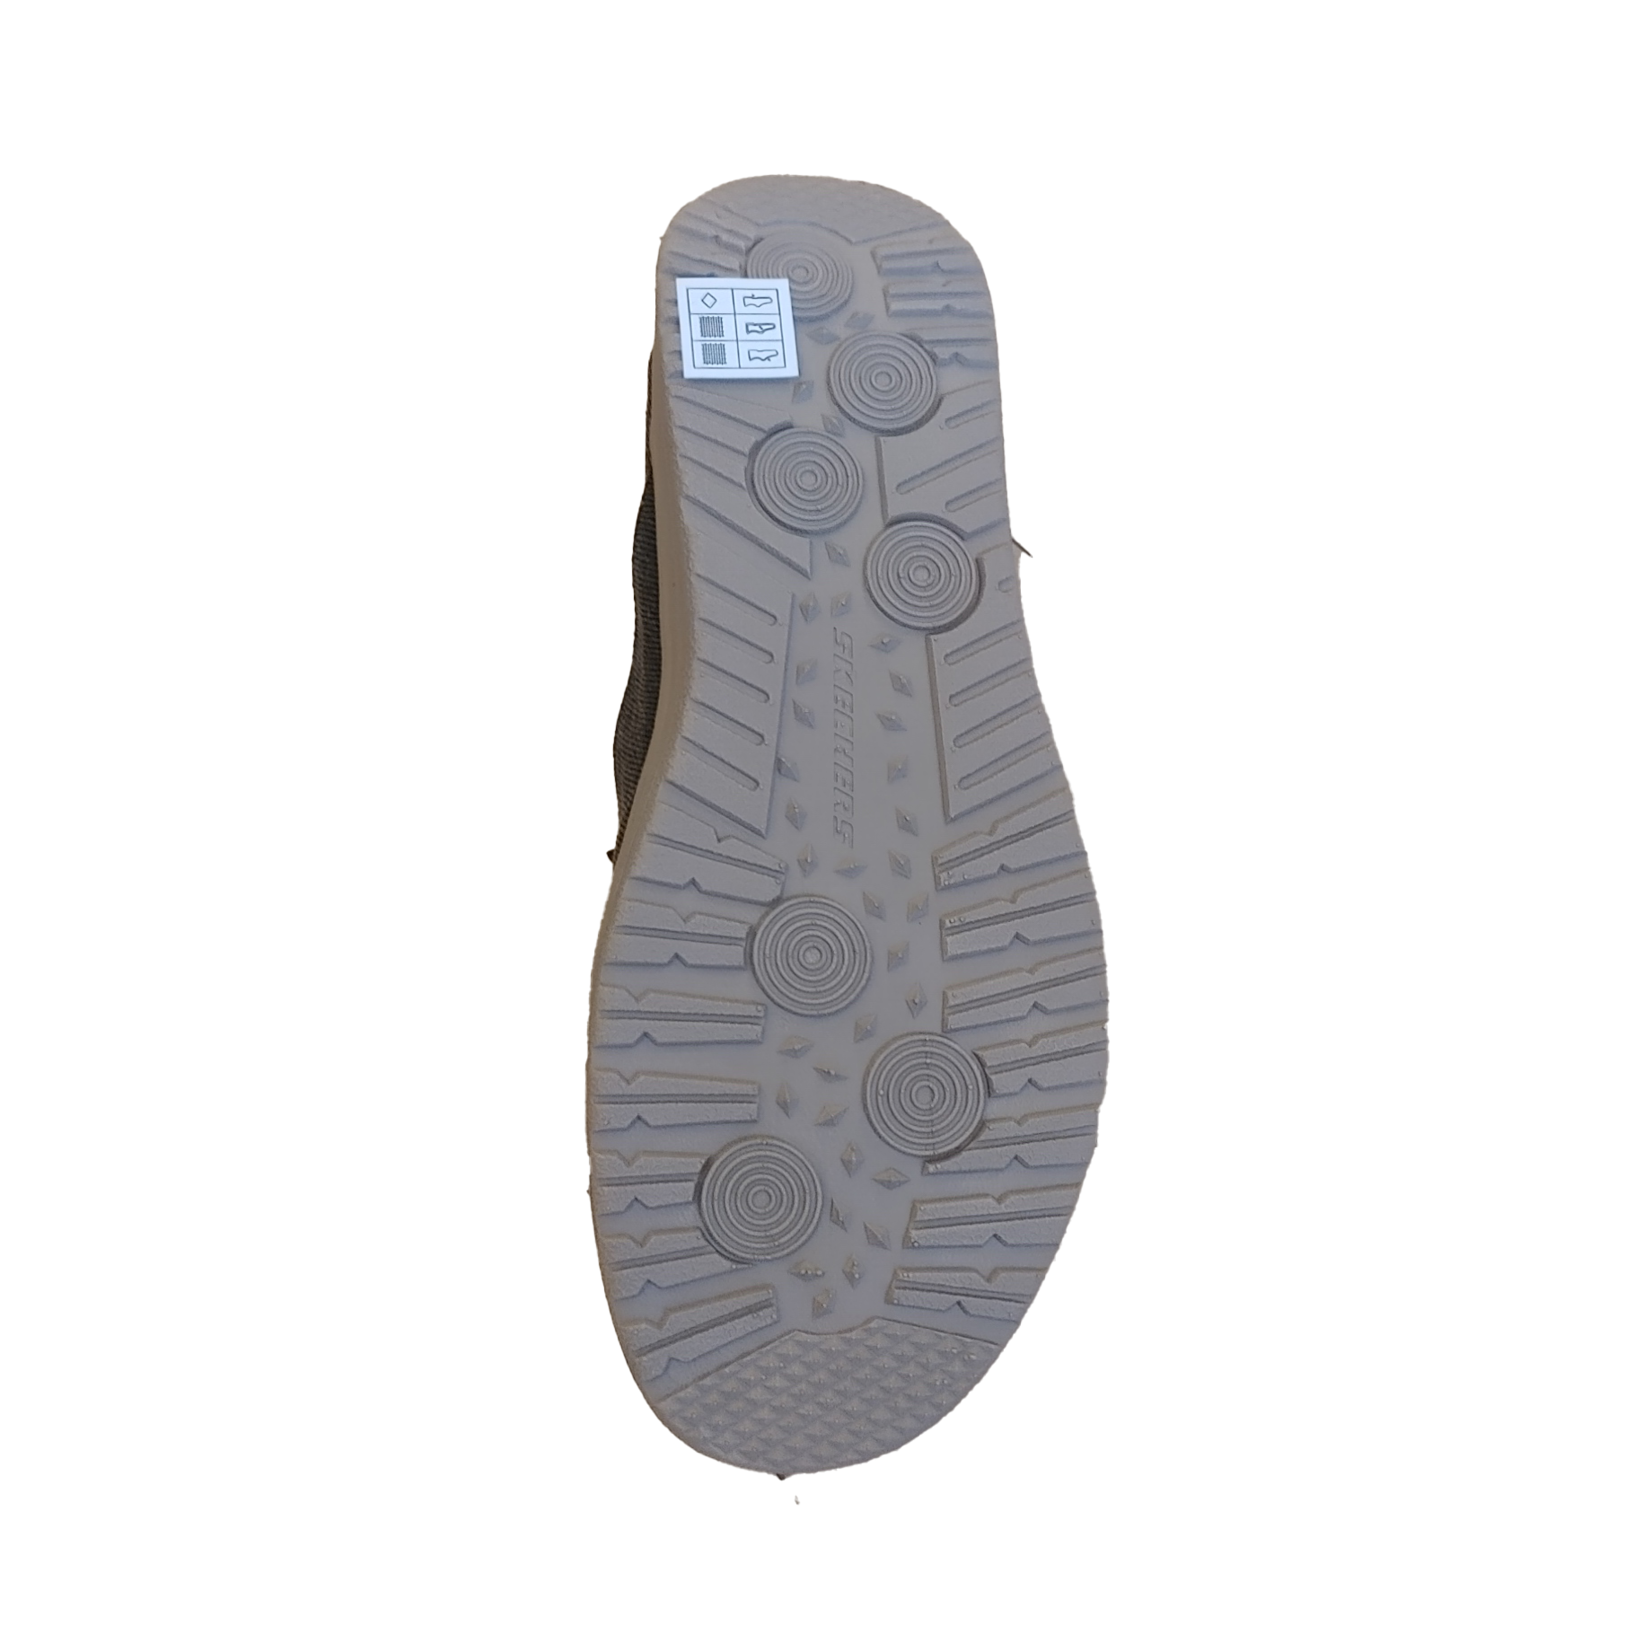 Skechers Skechers memory foam classic fit air-cooled mens shoe